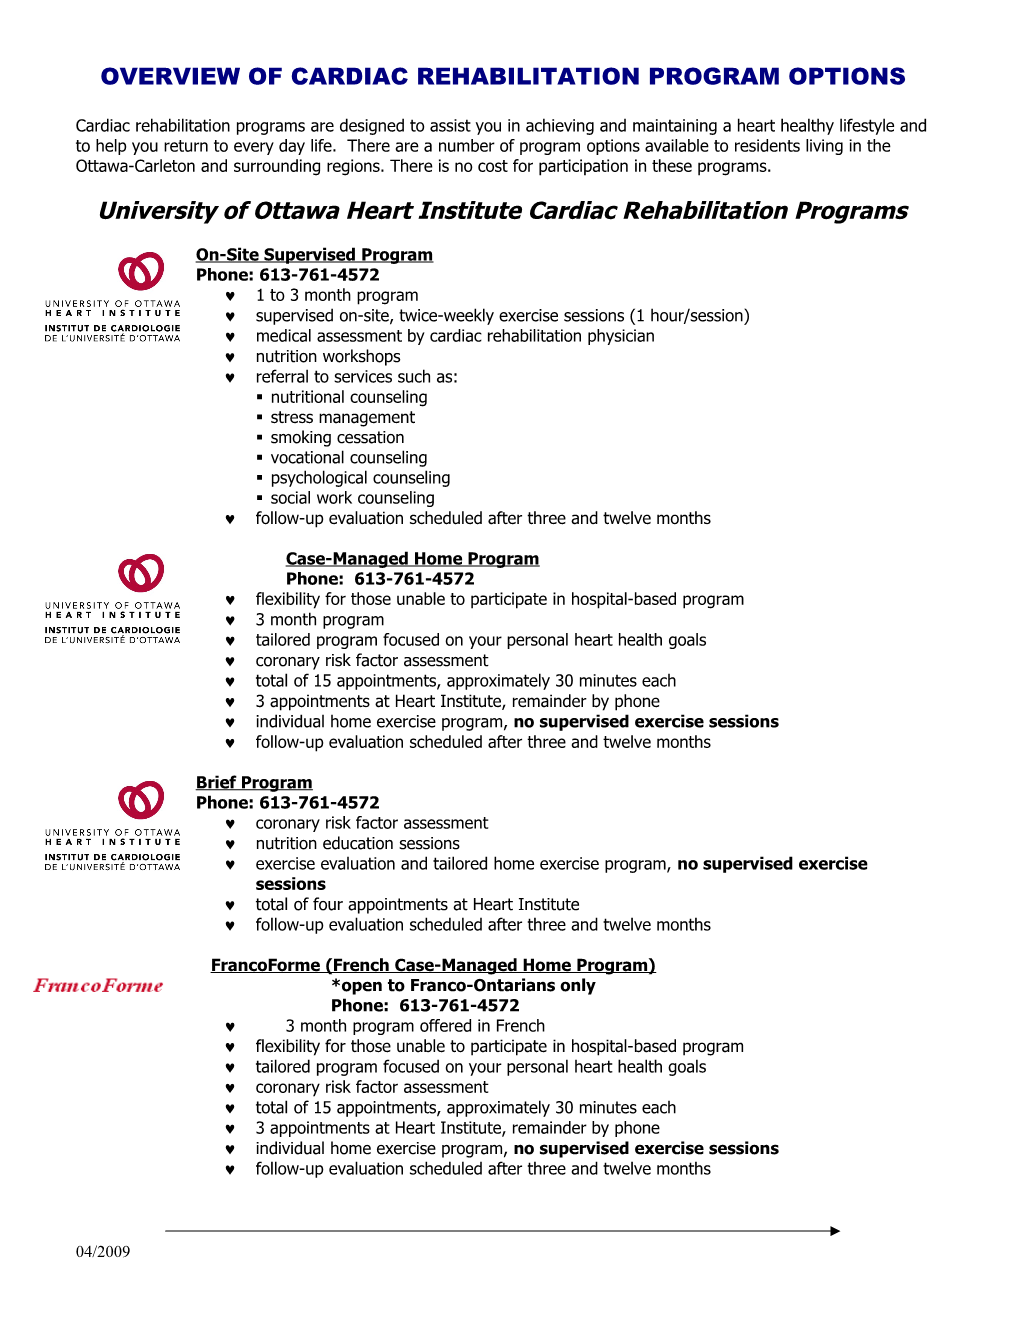 Overview of Cardiac Rehabilitation Program Options